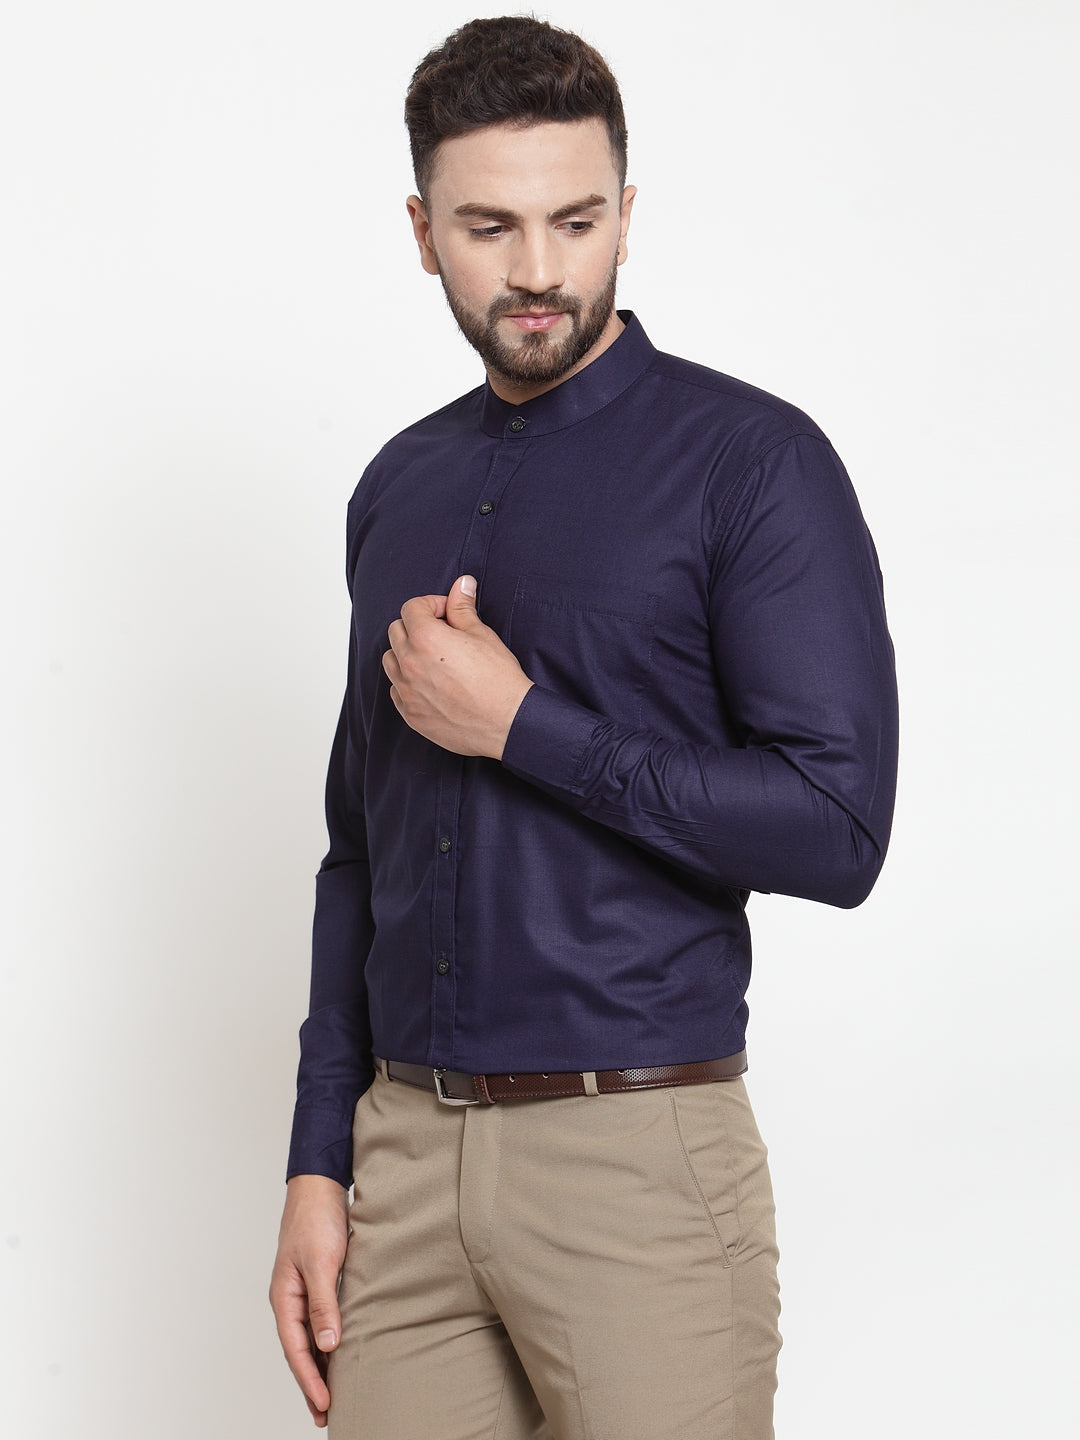 Men's Navy Cotton Solid Mandarin Collar Formal Shirts ( SF 726Navy ) - Jainish